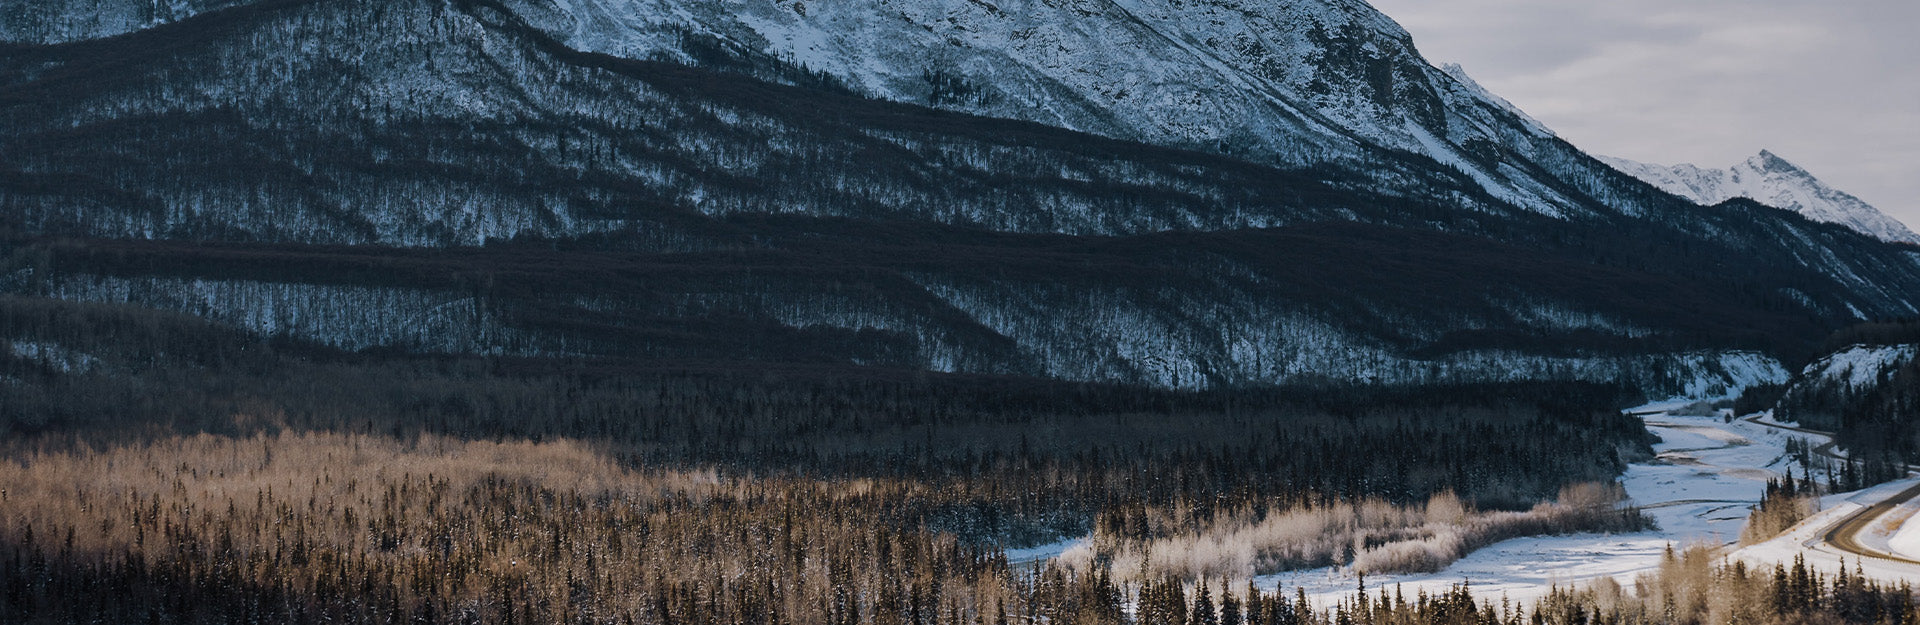 Image of Alaska wilderness